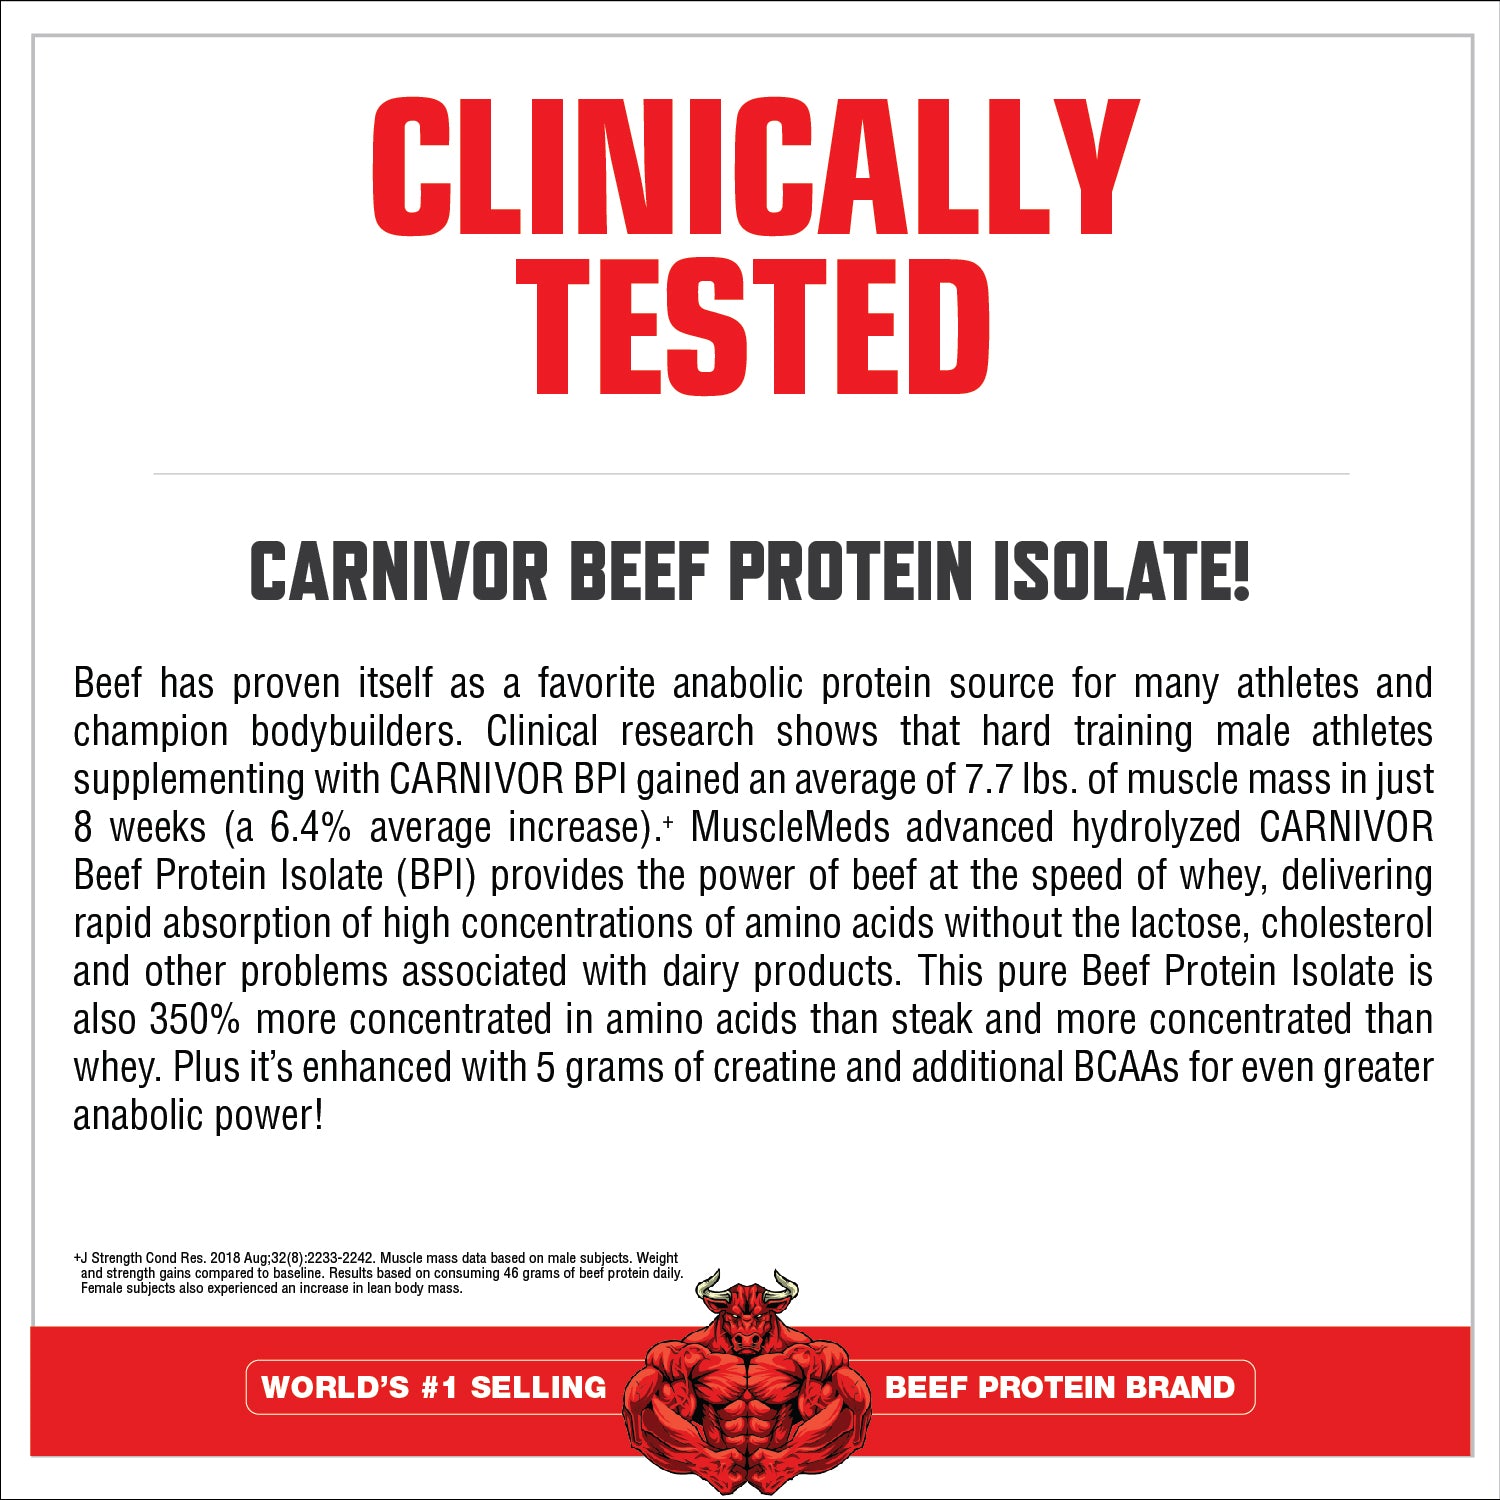 Carnivor Mass Big Steer 1250 - 100% Beef Protein Mass Gainer